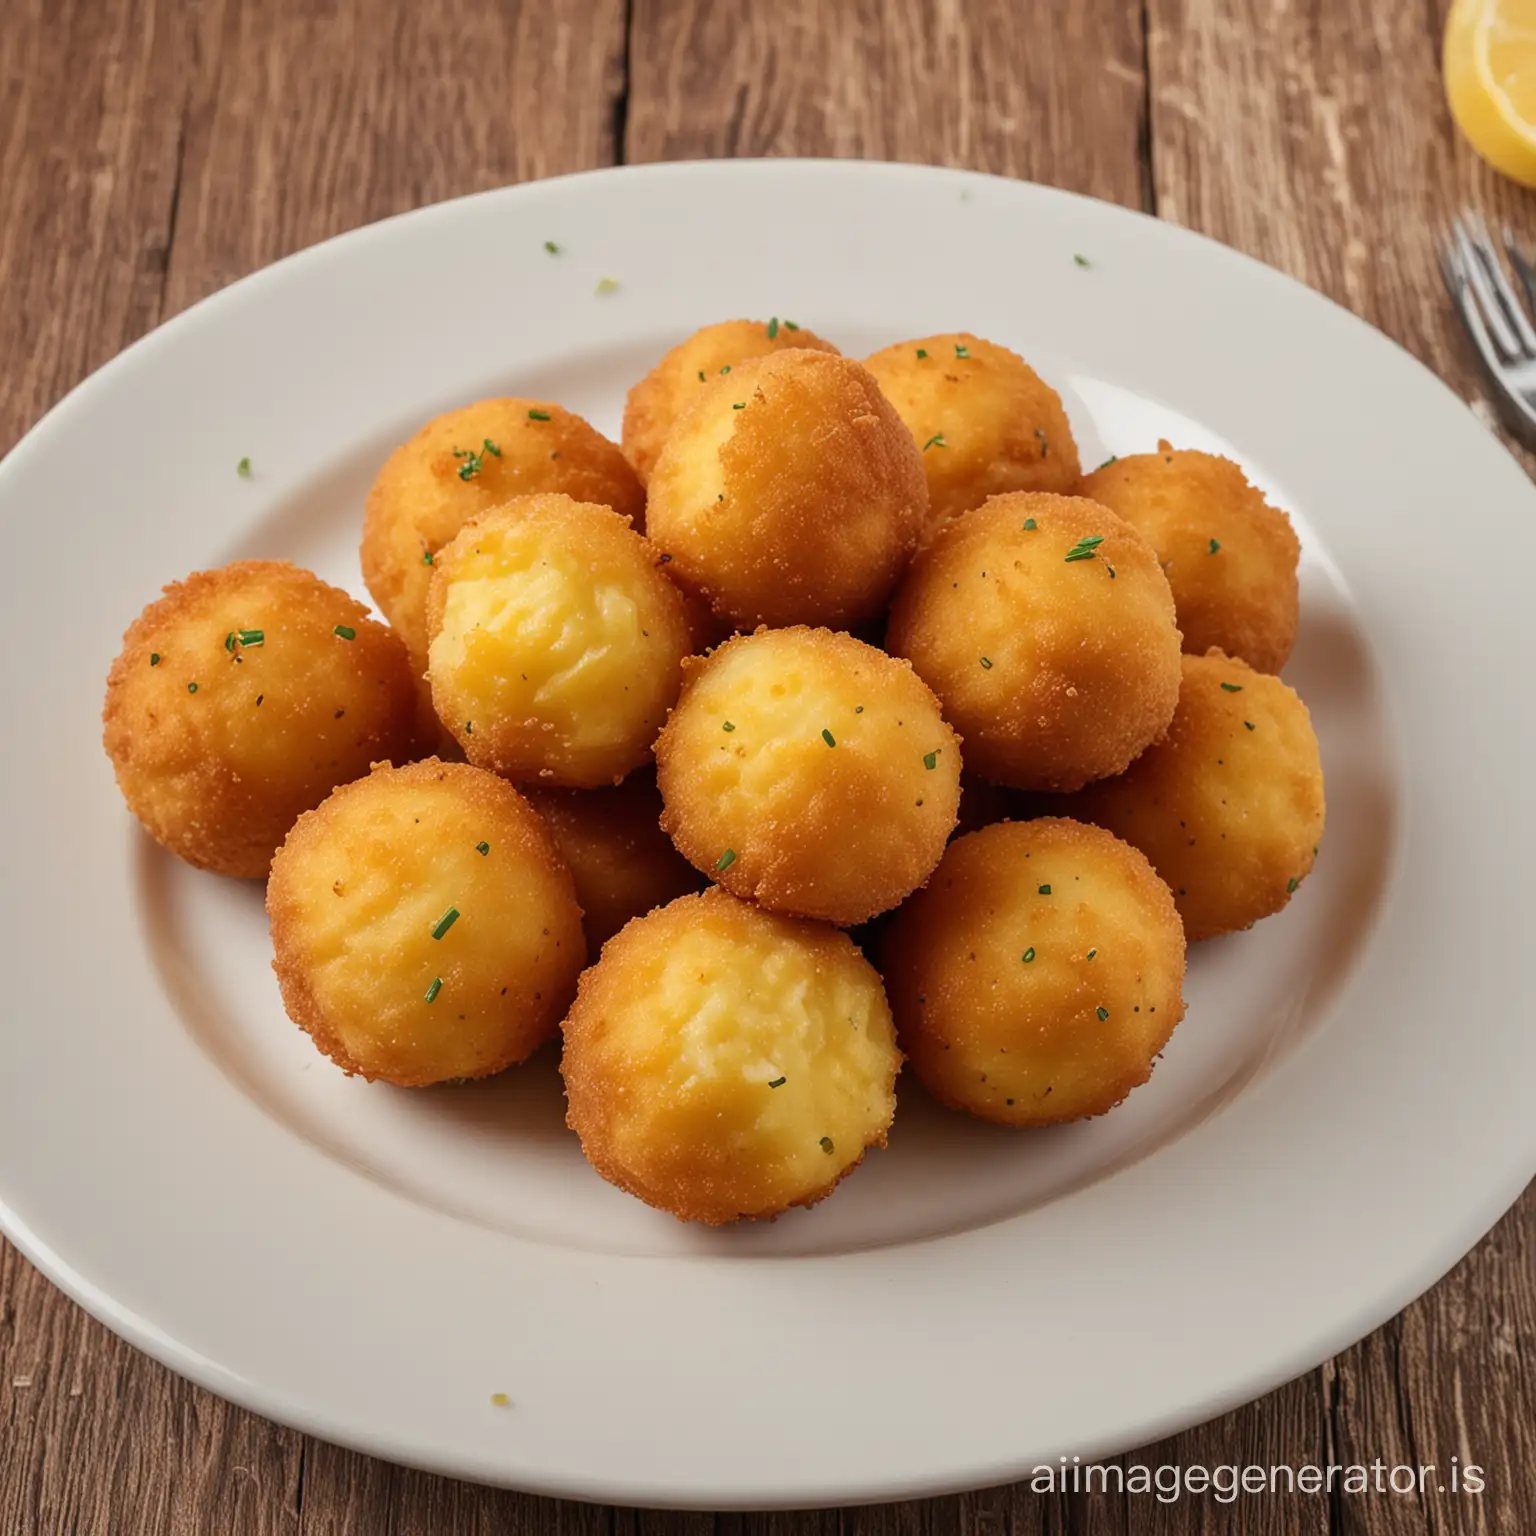 Crispy-Golden-Potato-Nugget-Balls-on-Rustic-Wooden-Table